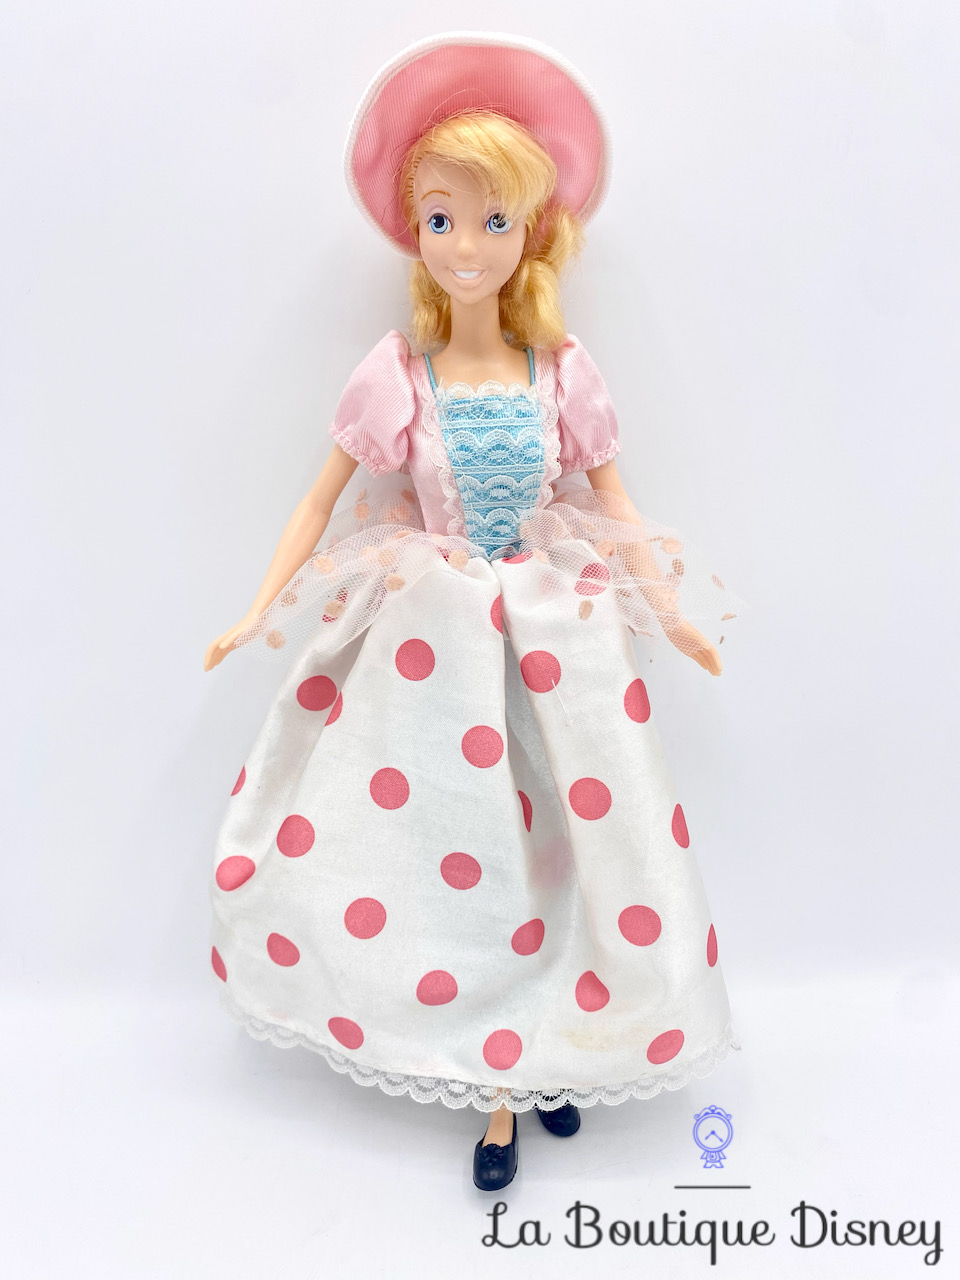 Poupée La Bergère Disney Mattel 1994 Toy Story vintage robe pois rose